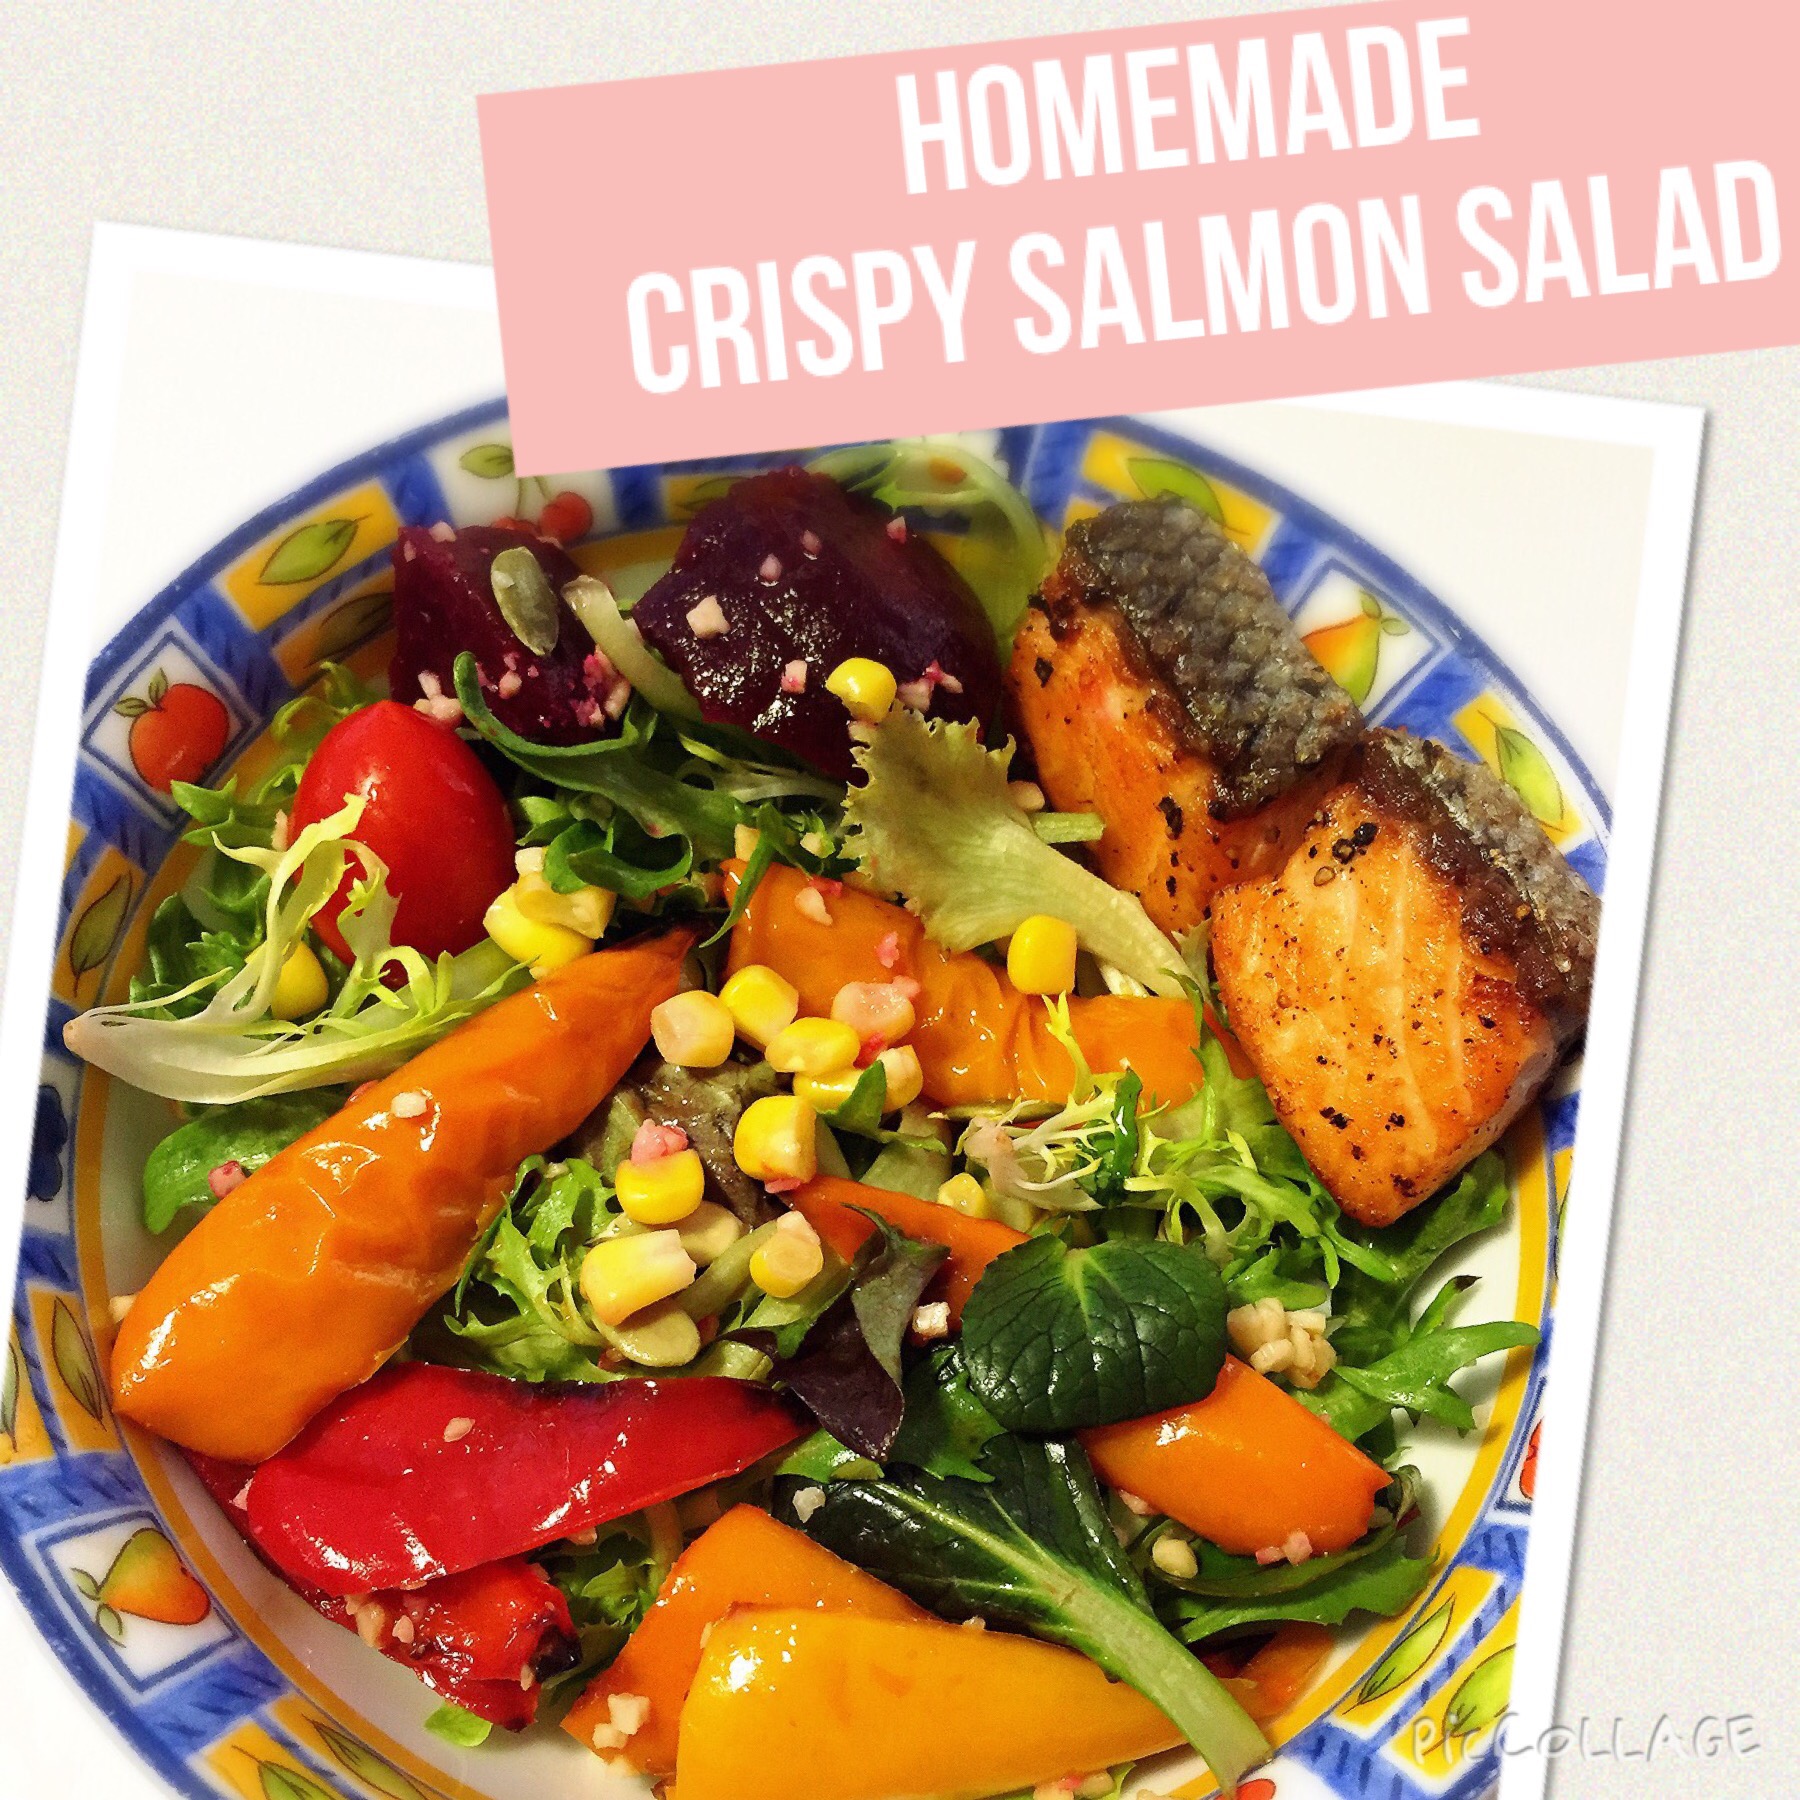 C: Crispy Salmon Salad